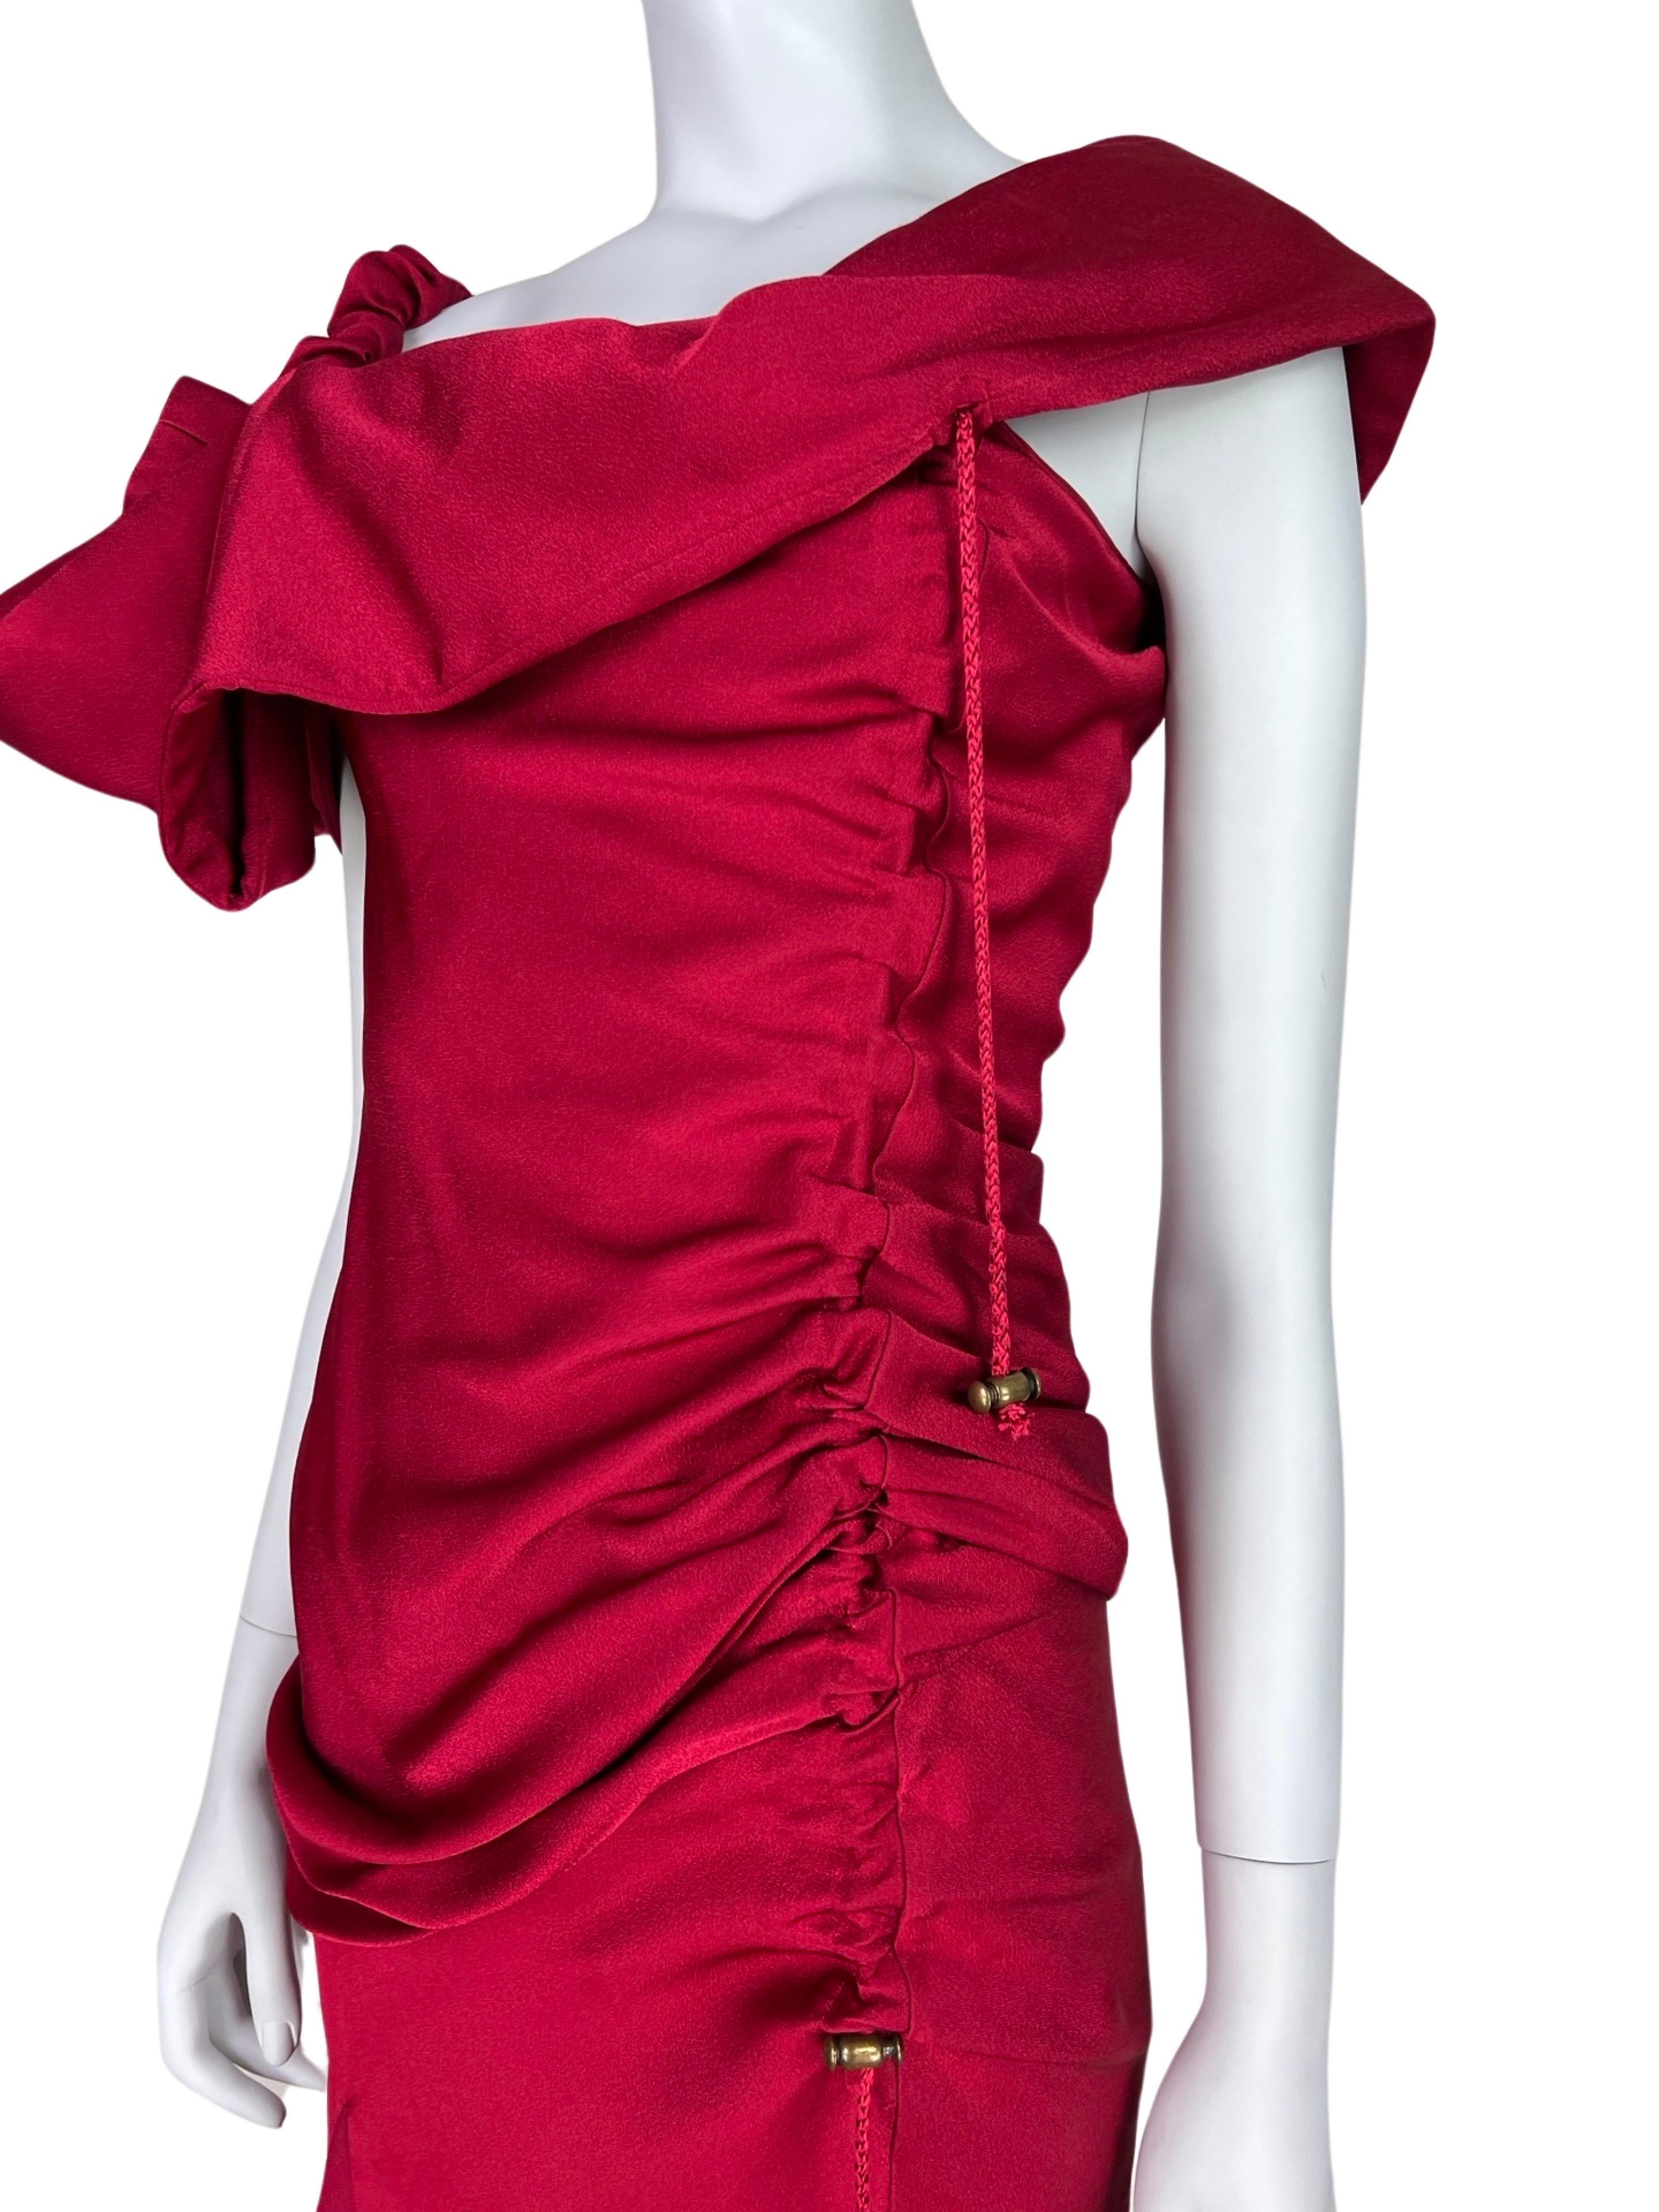 John Galliano Fall 2002 Red Draped Dress For Sale 9